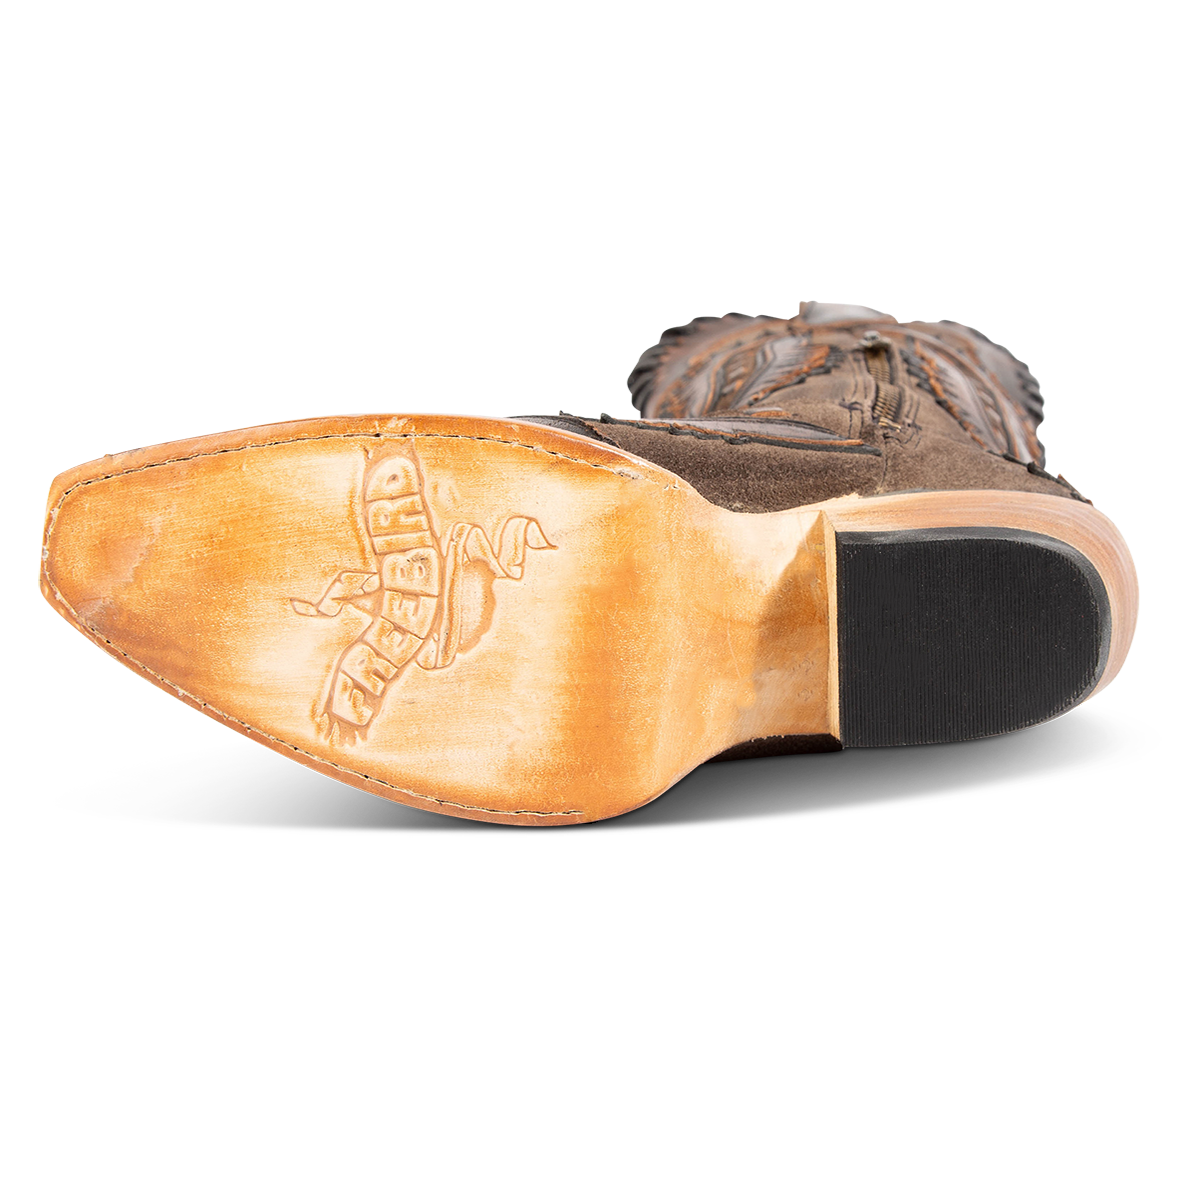 Leather sole imprinted with FREEBIRD on FREEBIRD women's Wayne black multi leather western mid-calf boot